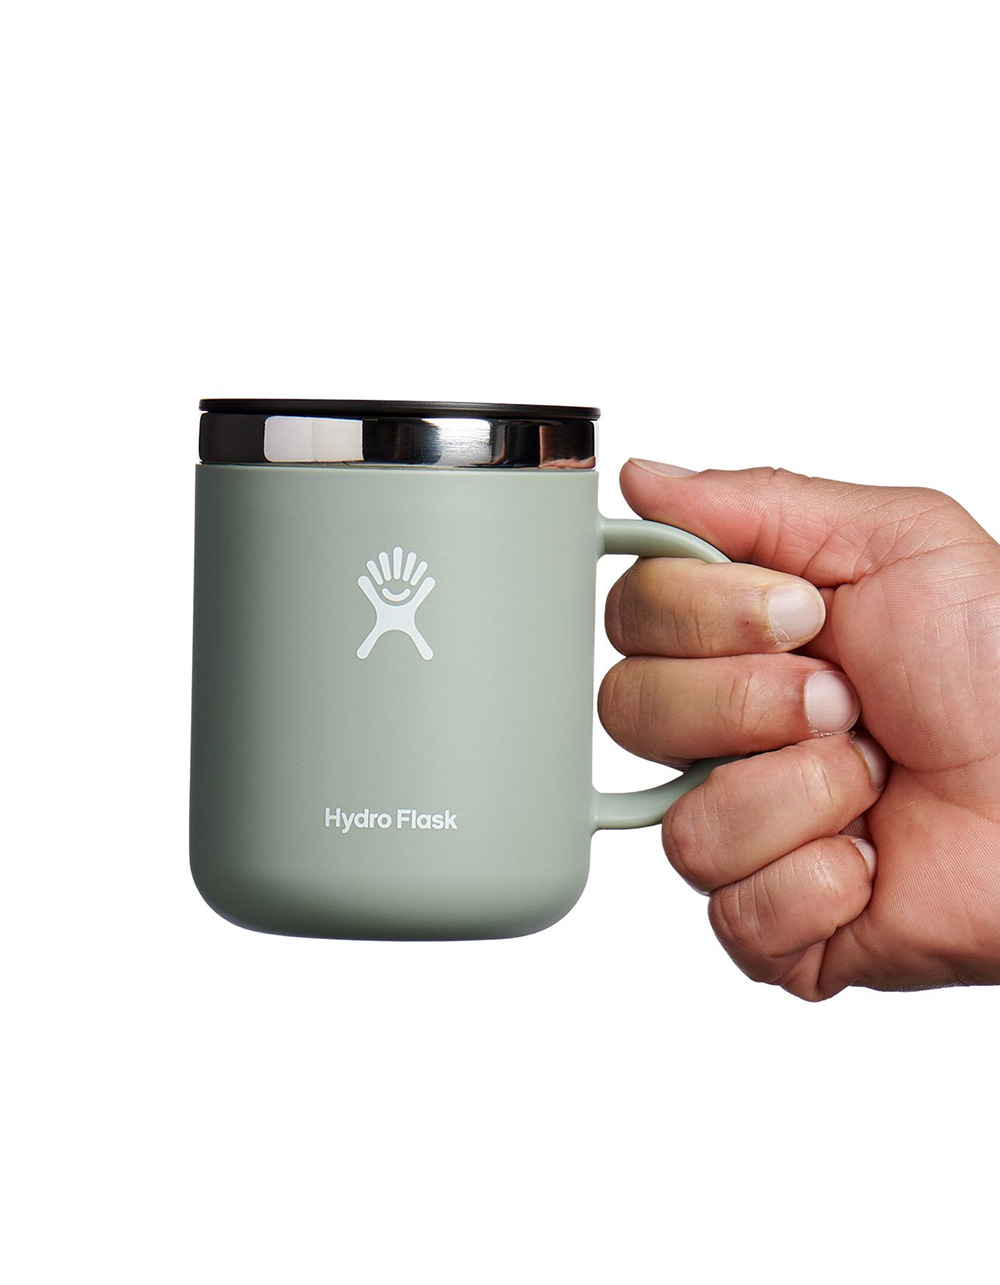 Hydro Flask Mug Review